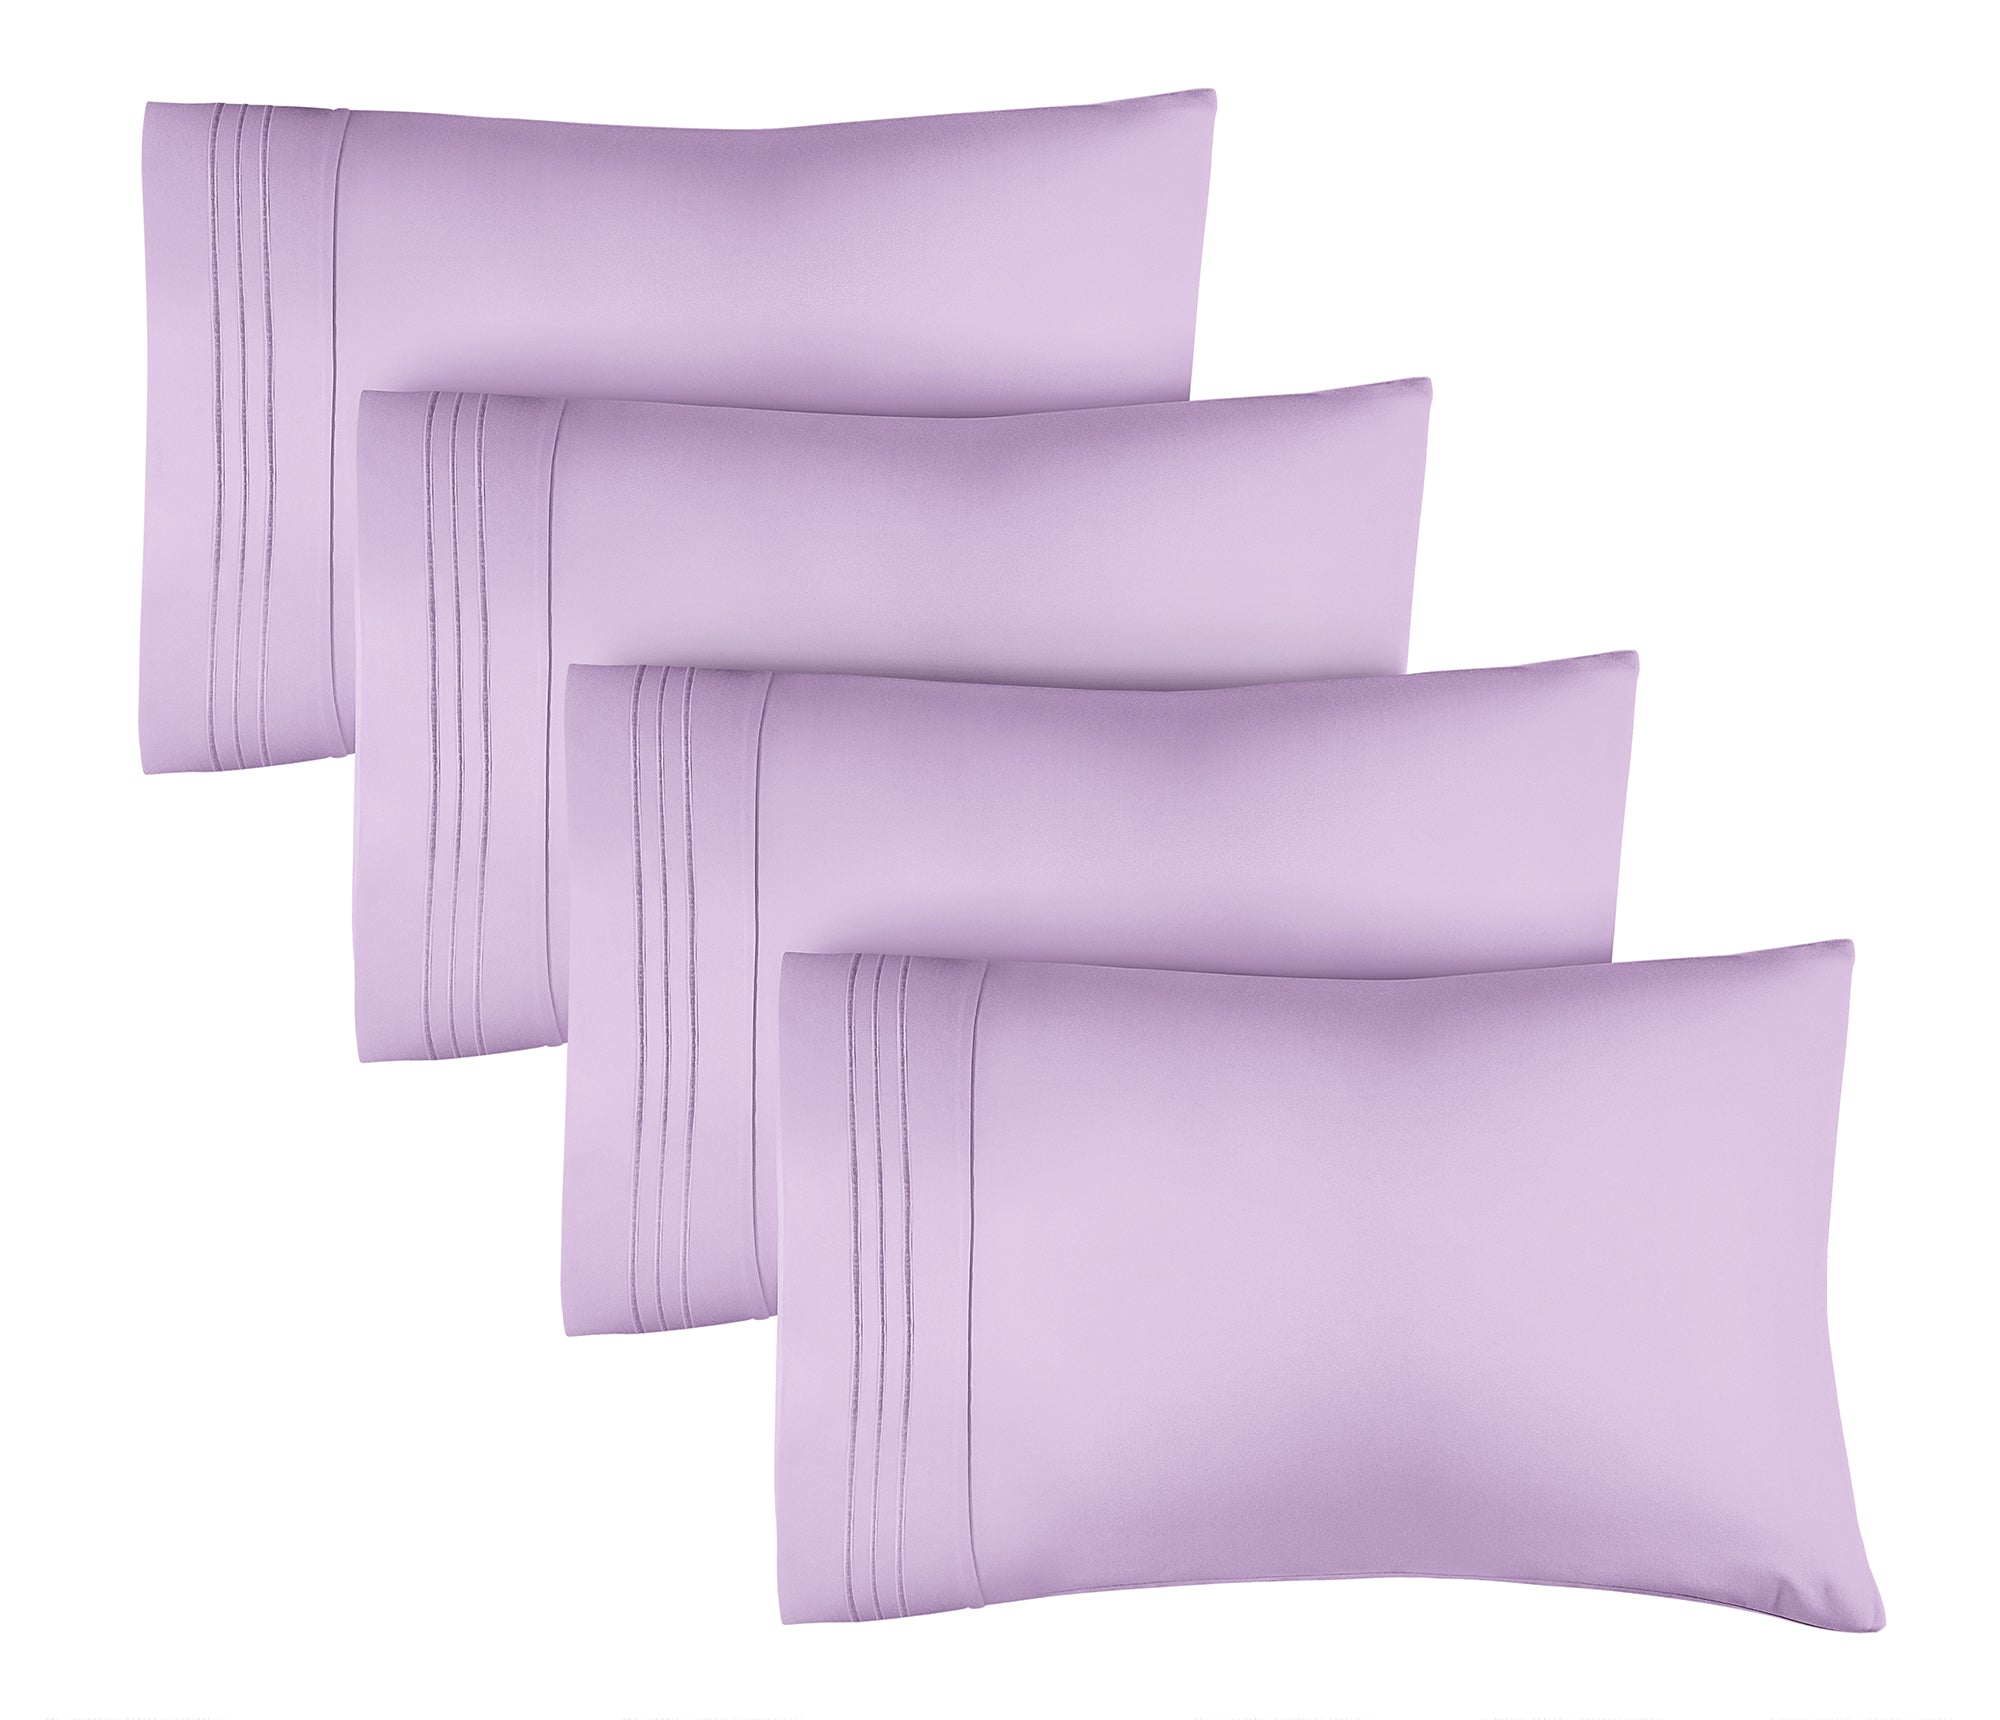 tes 4 Pillowcase Set - Lavender